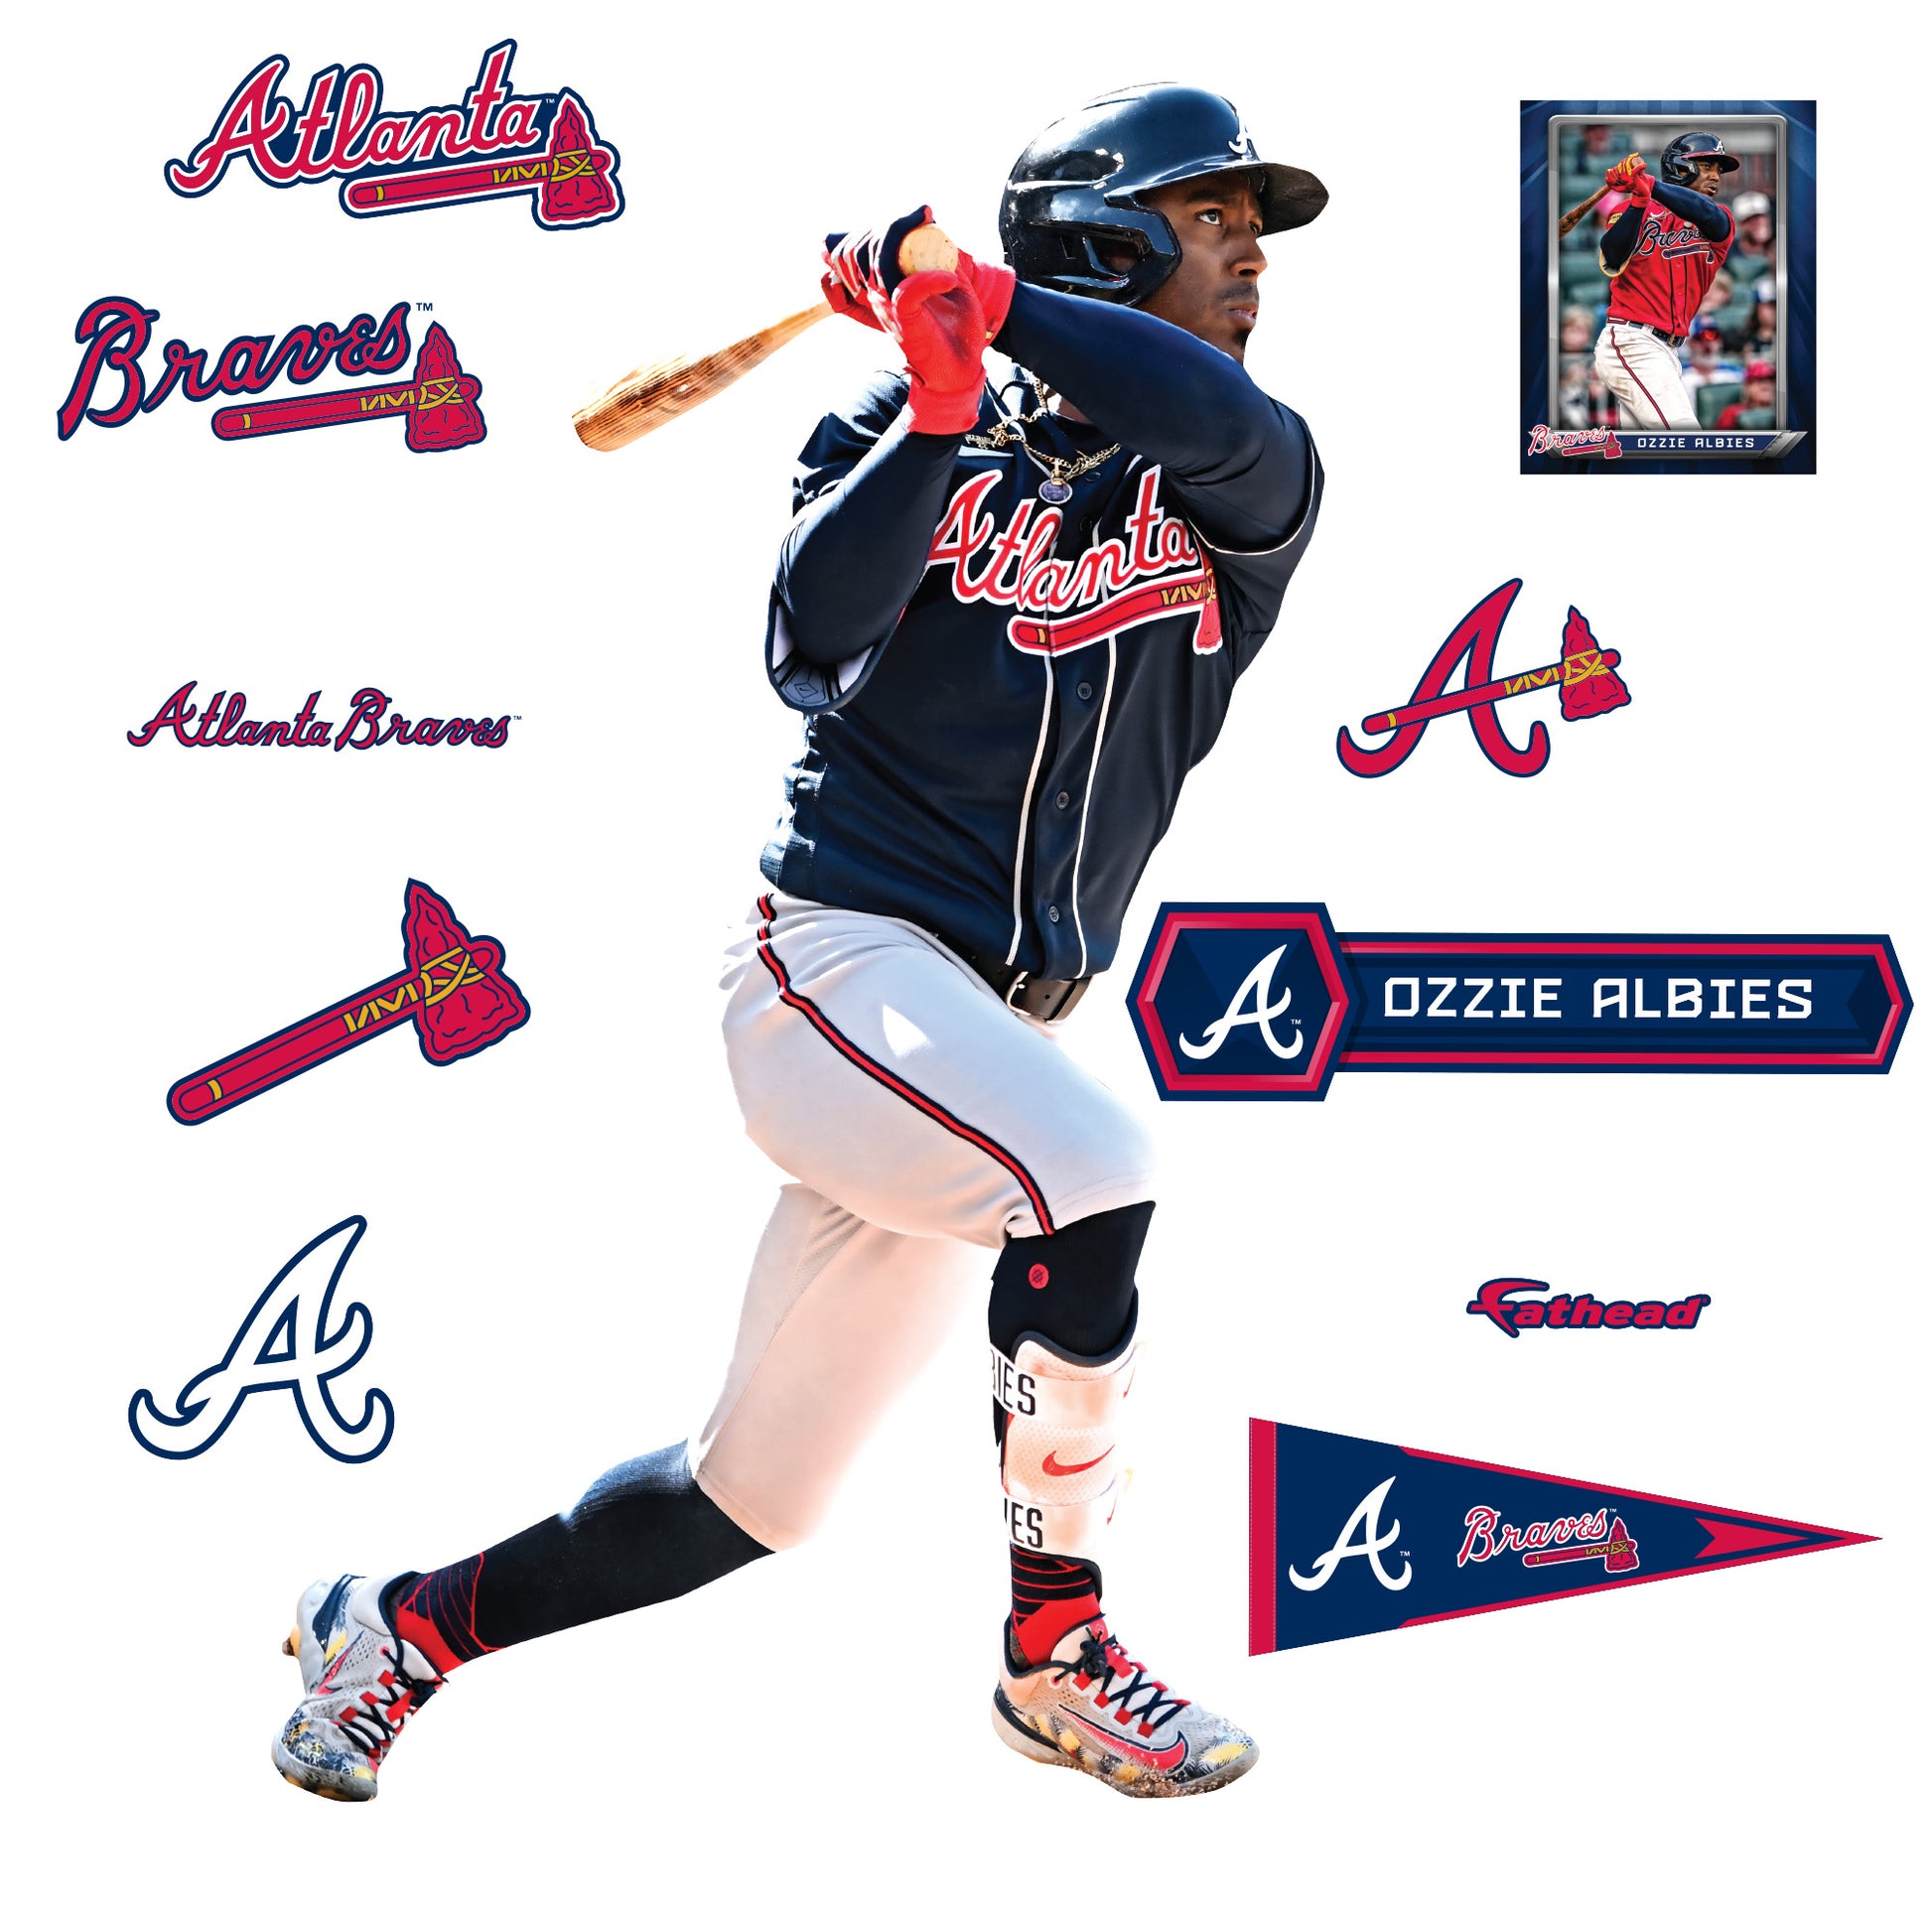 Ozzie Albies  Atlanta braves wallpaper, Braves baseball, Atlanta